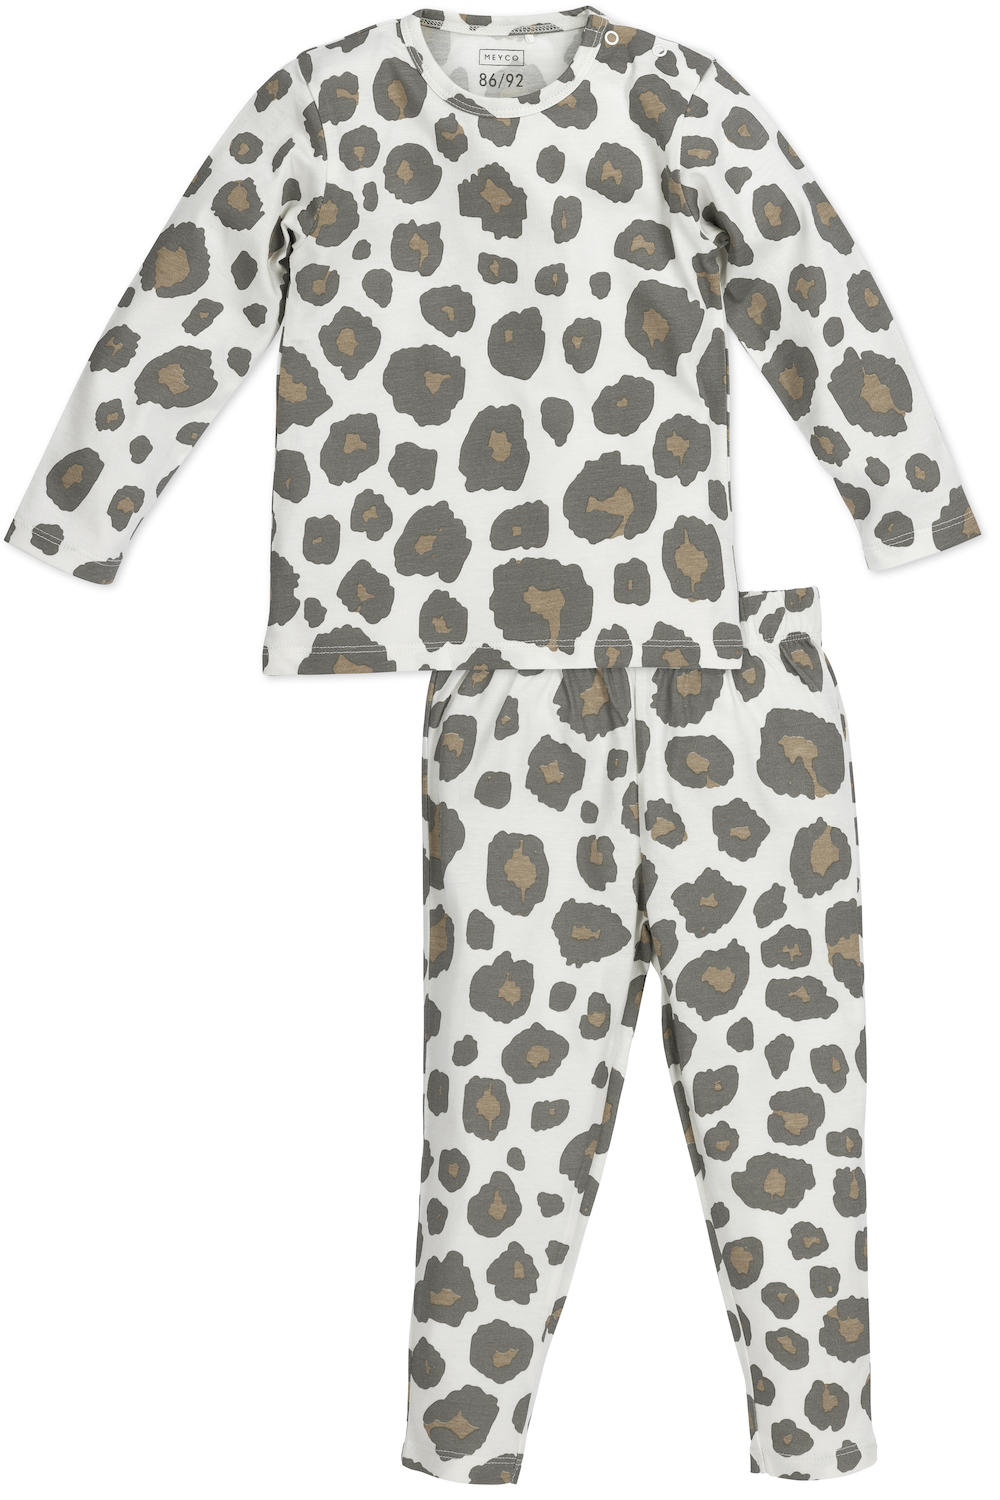 Pyjama Panter - Neutral - Größe 110/116